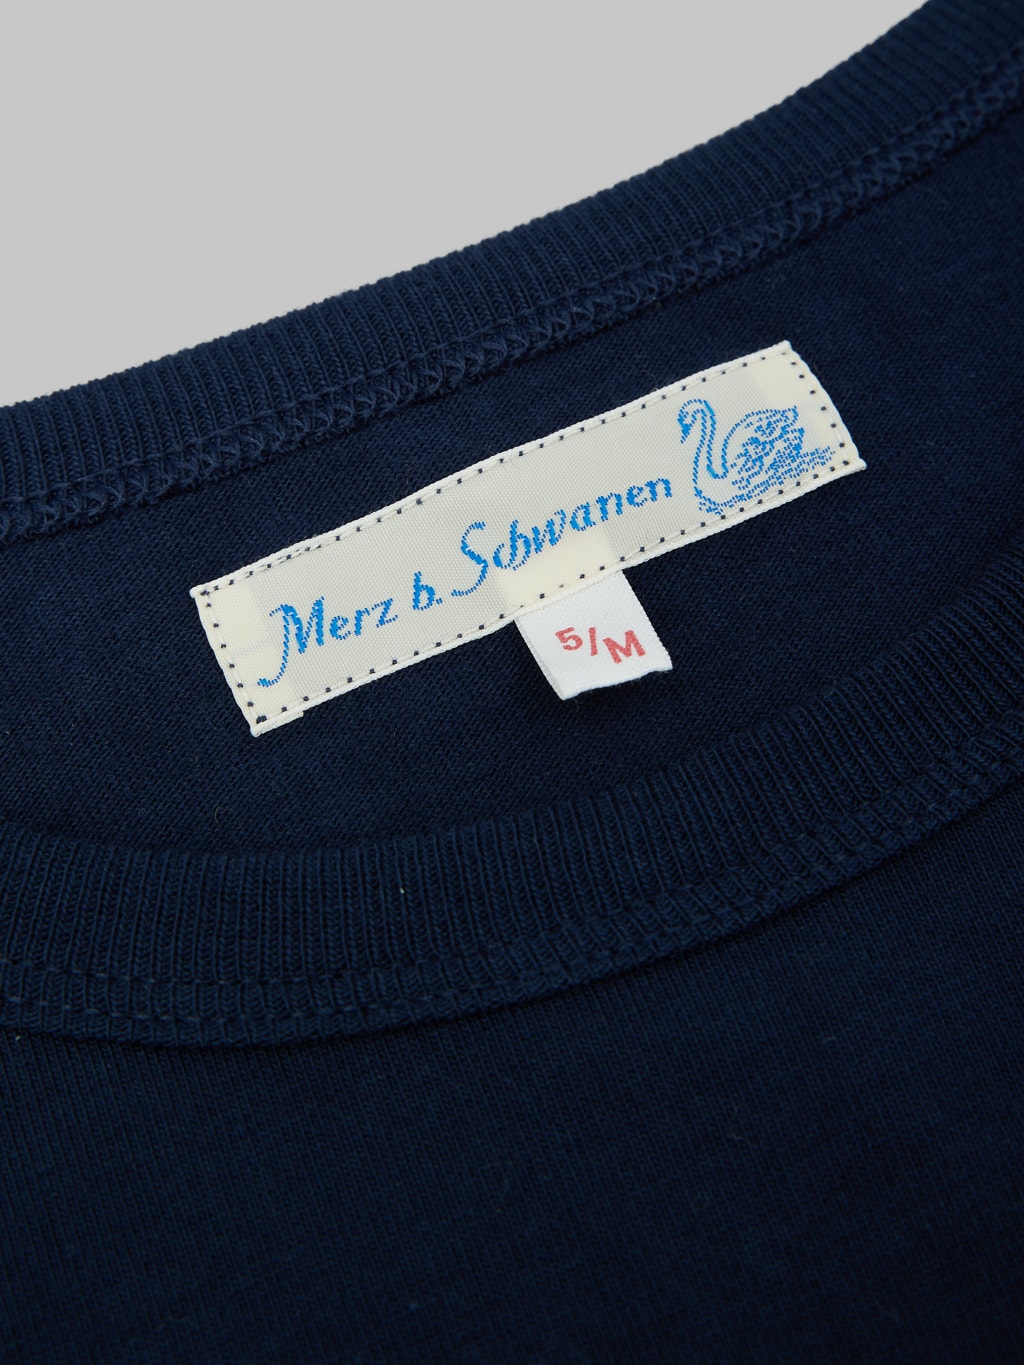 merz b schwanen good originals loopwheeled Tshirt classic fit blue interior label